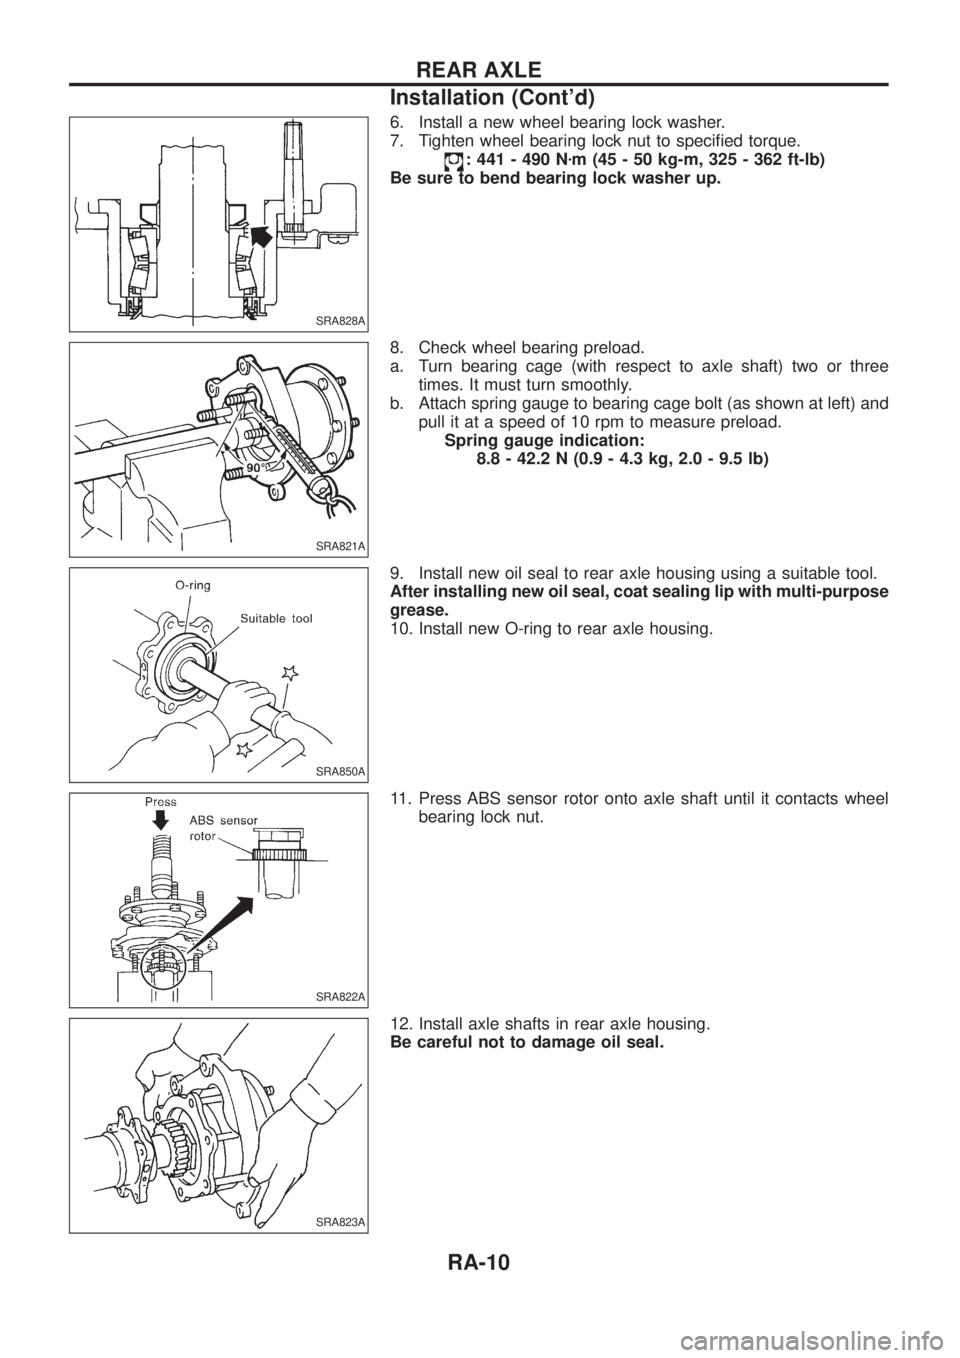 NISSAN PATROL 2006 Repair Manual 6. Install a new wheel bearing lock washer.
7. Tighten wheel bearing lock nut to speci®ed torque.
: 441 - 490 Nzm (45 - 50 kg-m, 325 - 362 ft-lb)
Be sure to bend bearing lock washer up.
8. Check whee